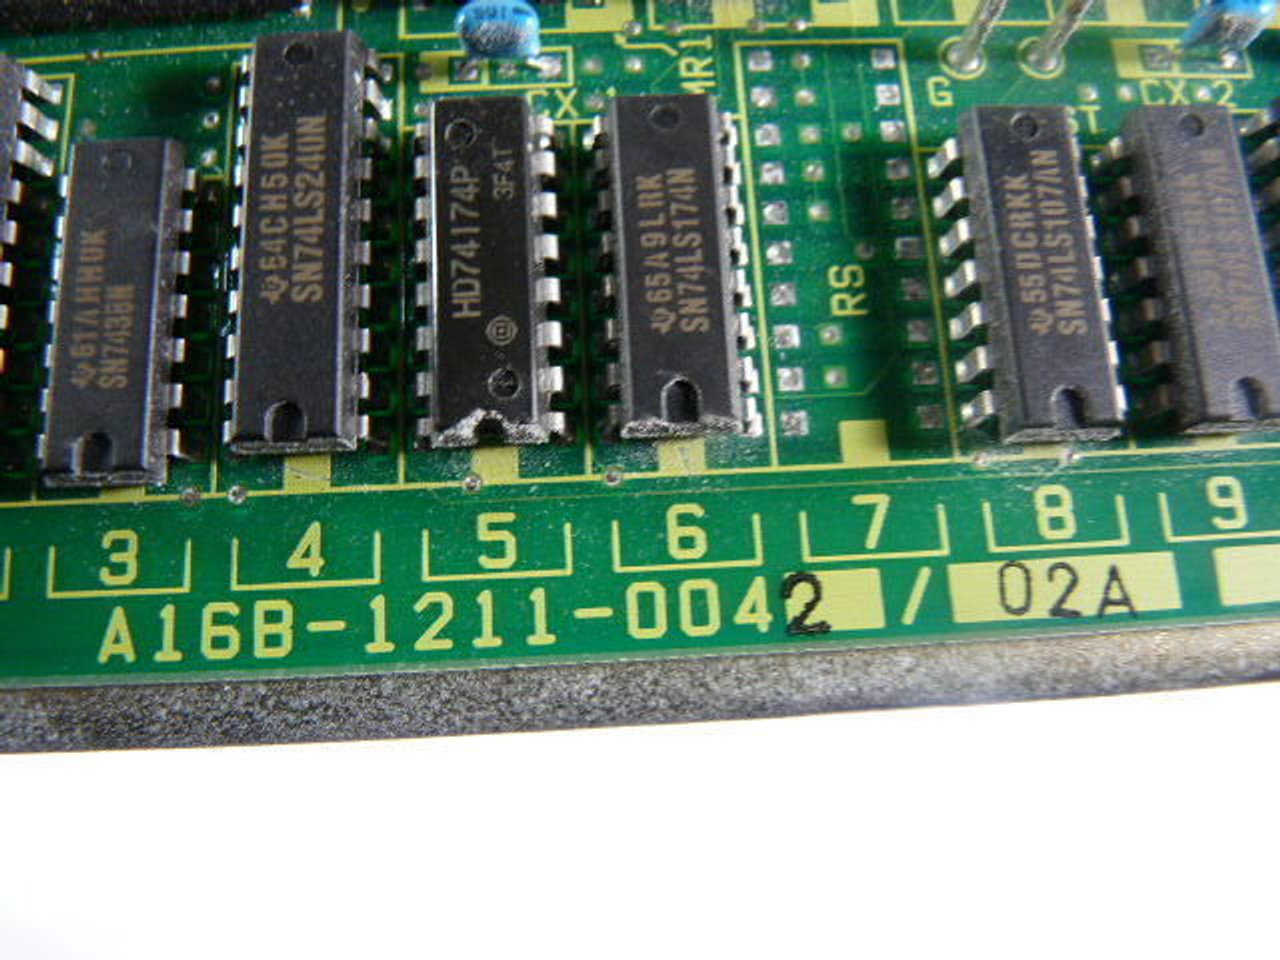 GE Fanuc A16B-1211-0042/02A Memory Module PC Board USED